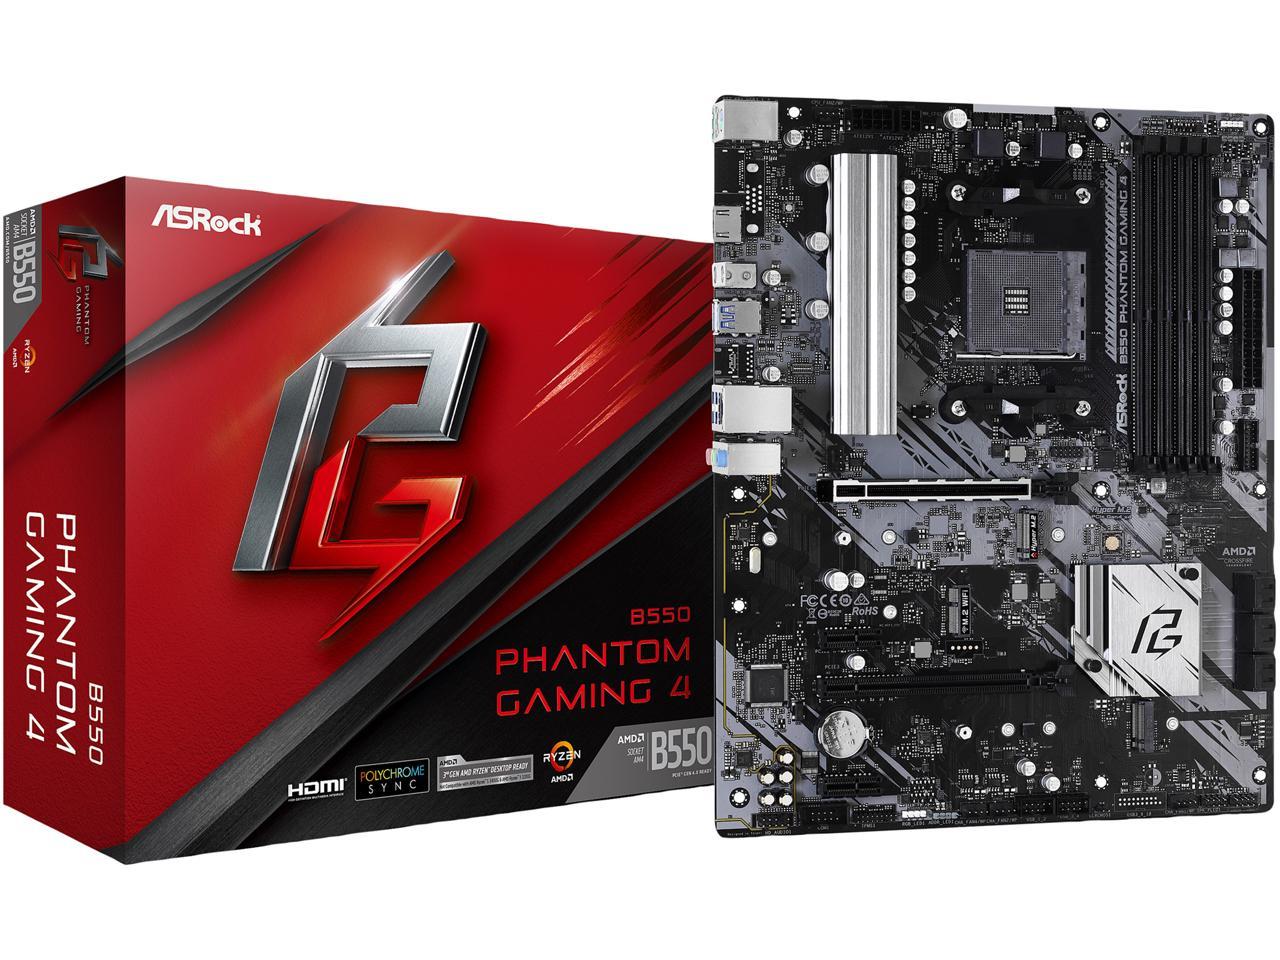 ASRock B550 Phantom Gaming 4 AM4 AMD B550 SATA 6Gb/s ATX AMD Motherboard $80 @newegg amazon walmart ebay